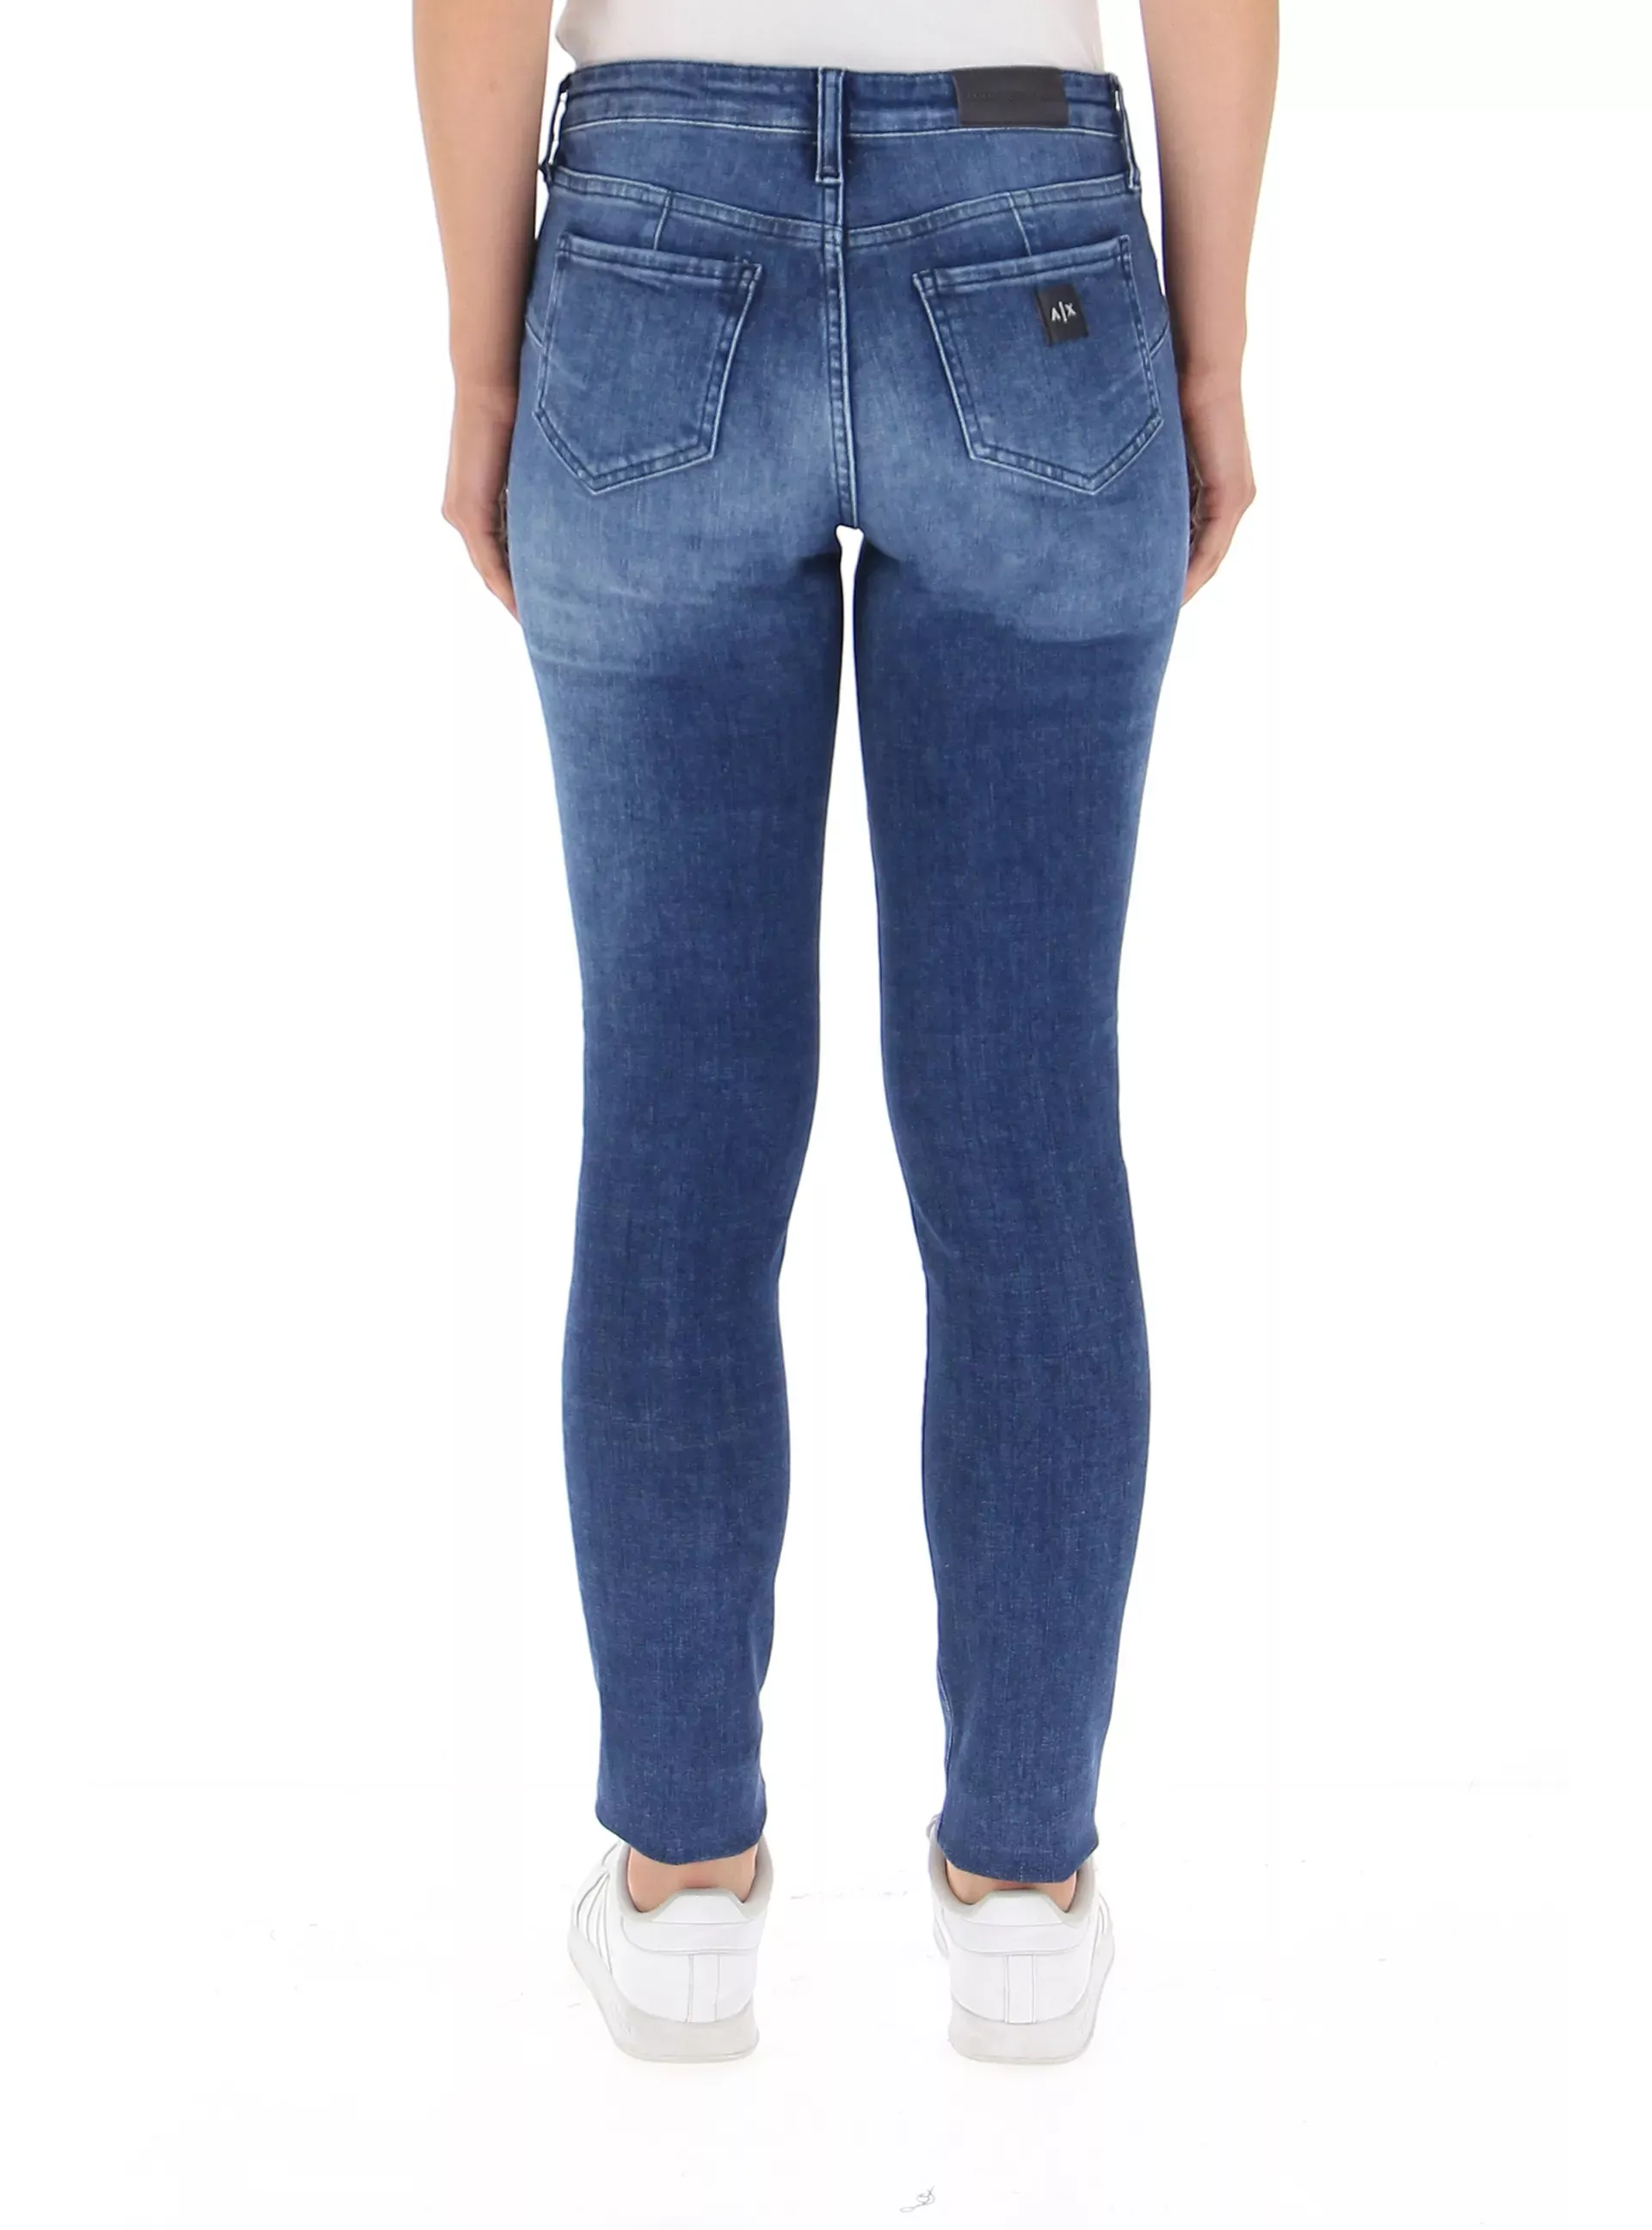 Armani Exchange Super Skinny Jeans